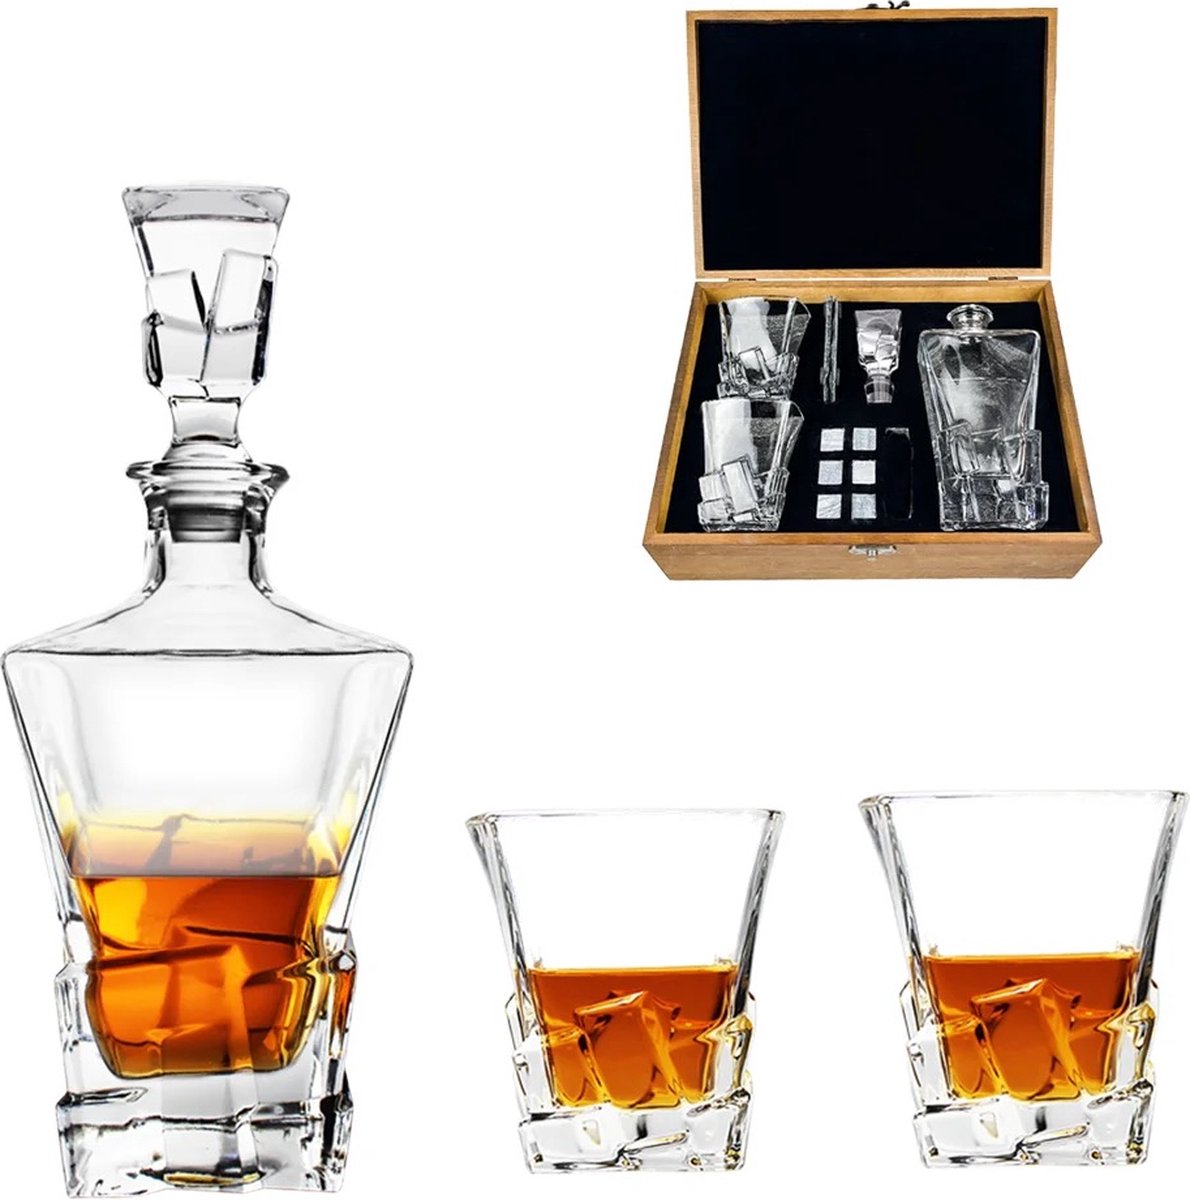 Limited Whiskey Karaf Set - 2 Whiskey Glazen Set - 8 Whiskey Stones - 2 Leistenen Onderzetters - Luxe Whisky Cadeauset - Decanteer Karaf Set